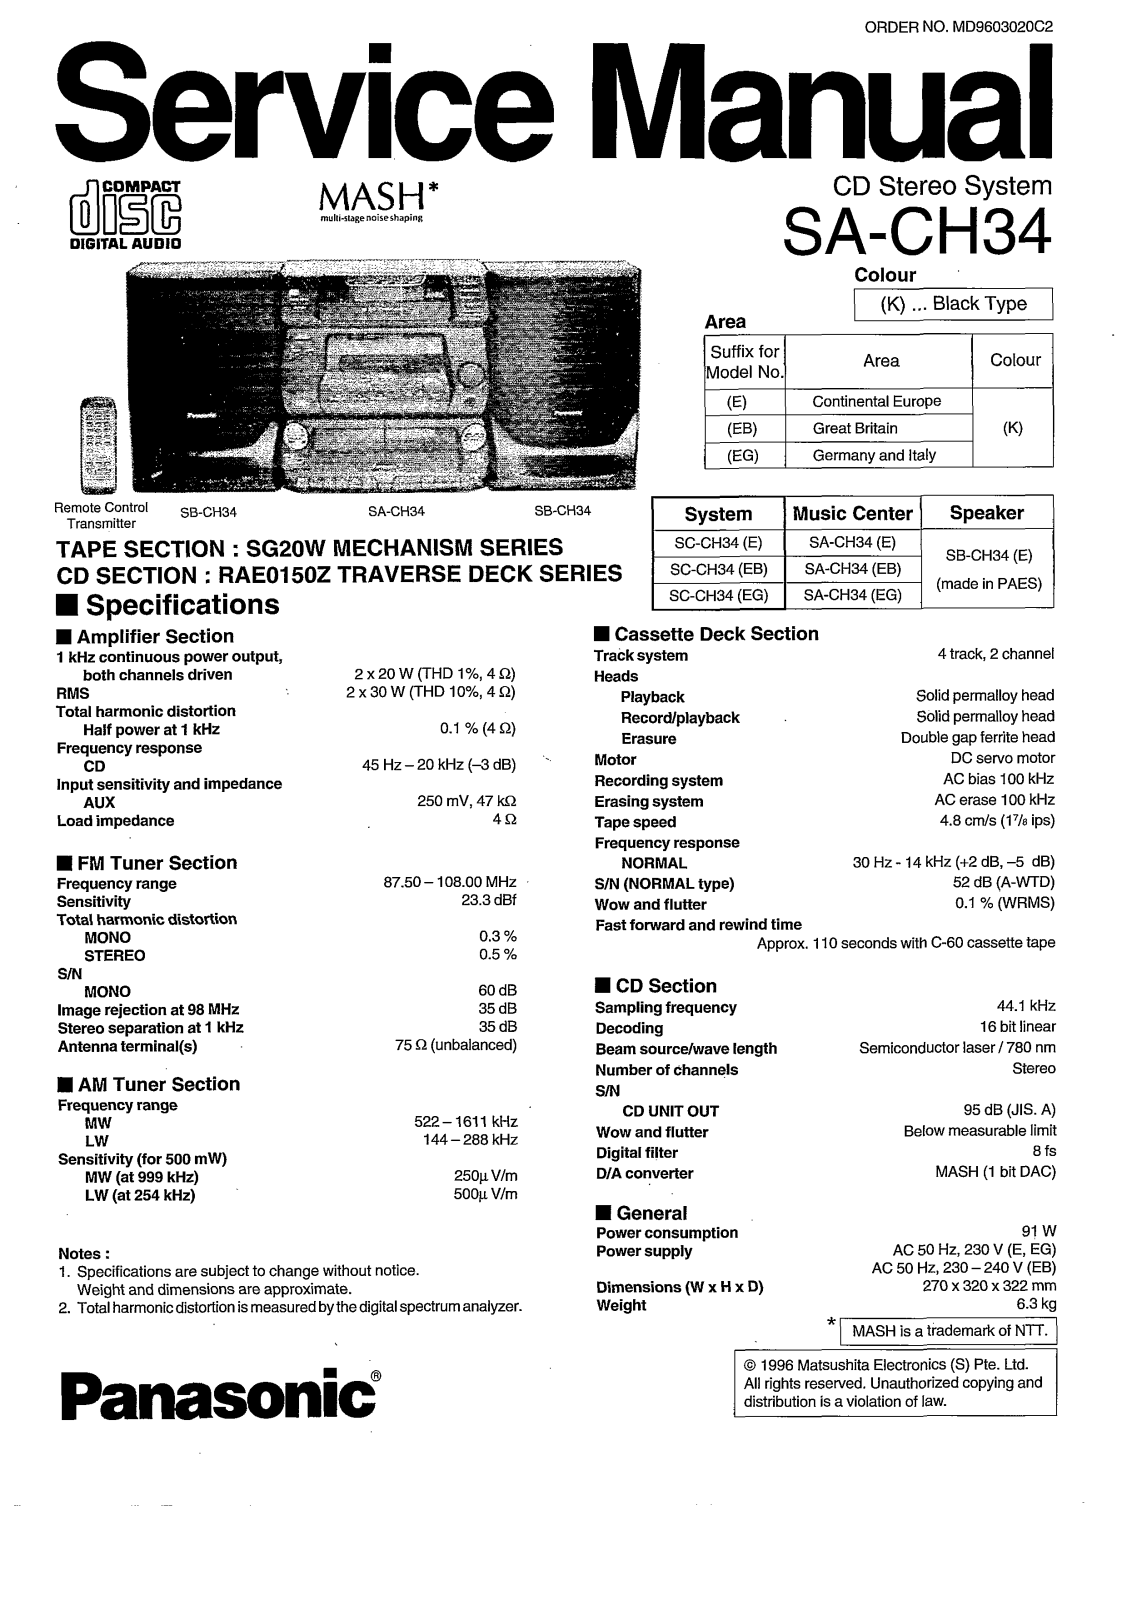 Panasonic SACH-34 Service manual